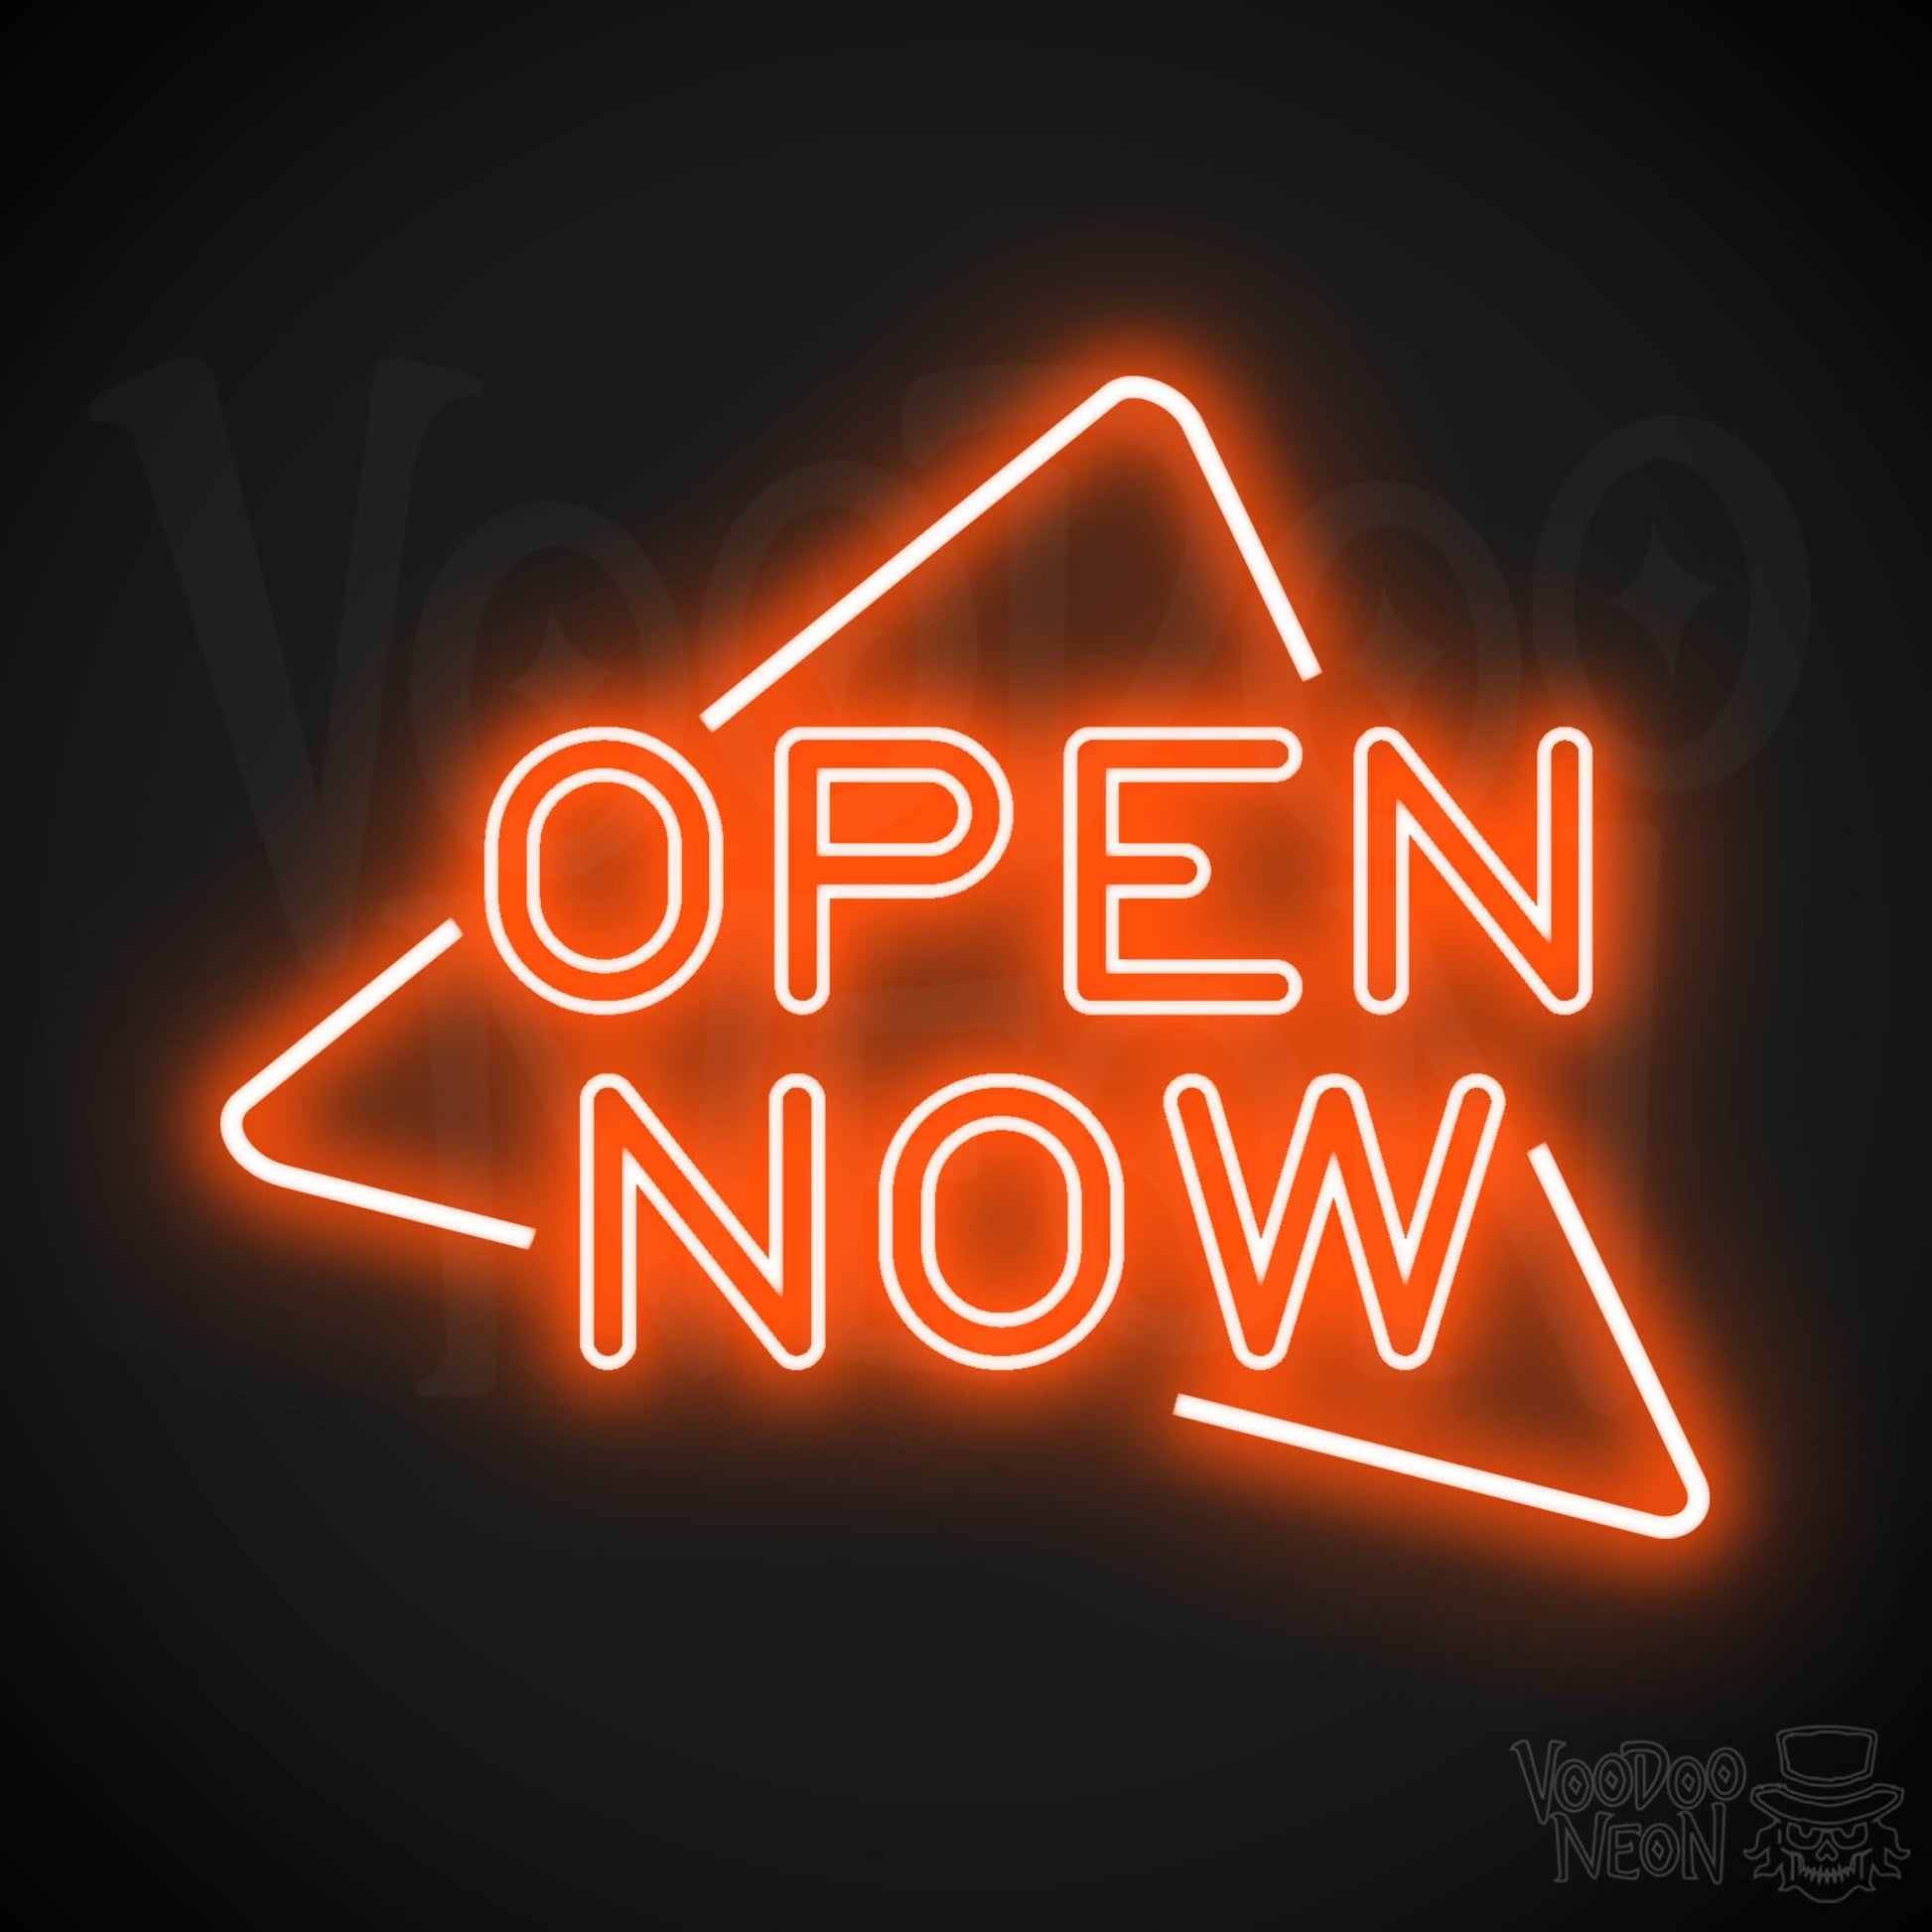 Neon Open Now Shop Sign - Open Now Neon Sign - LED Sign - Color Orange